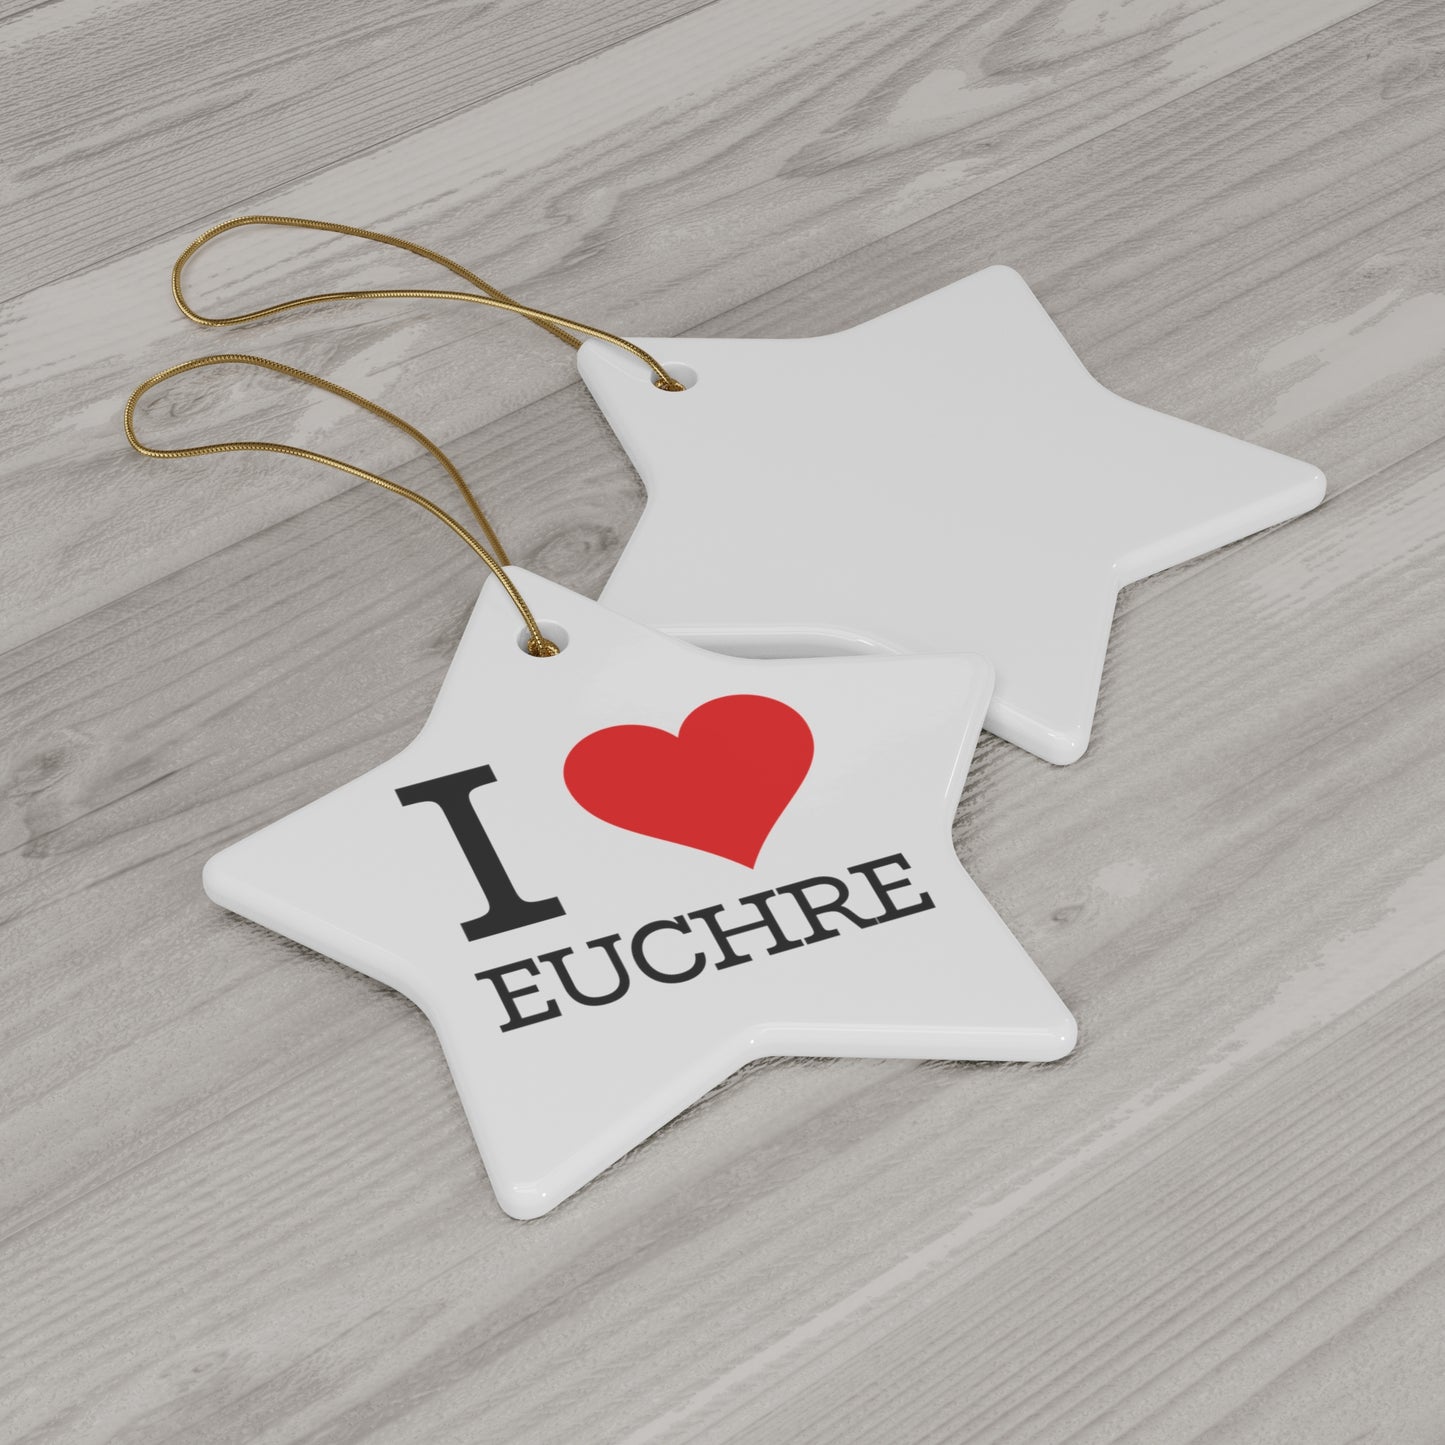 "I ❤️ Euchre" Ceramic Ornament